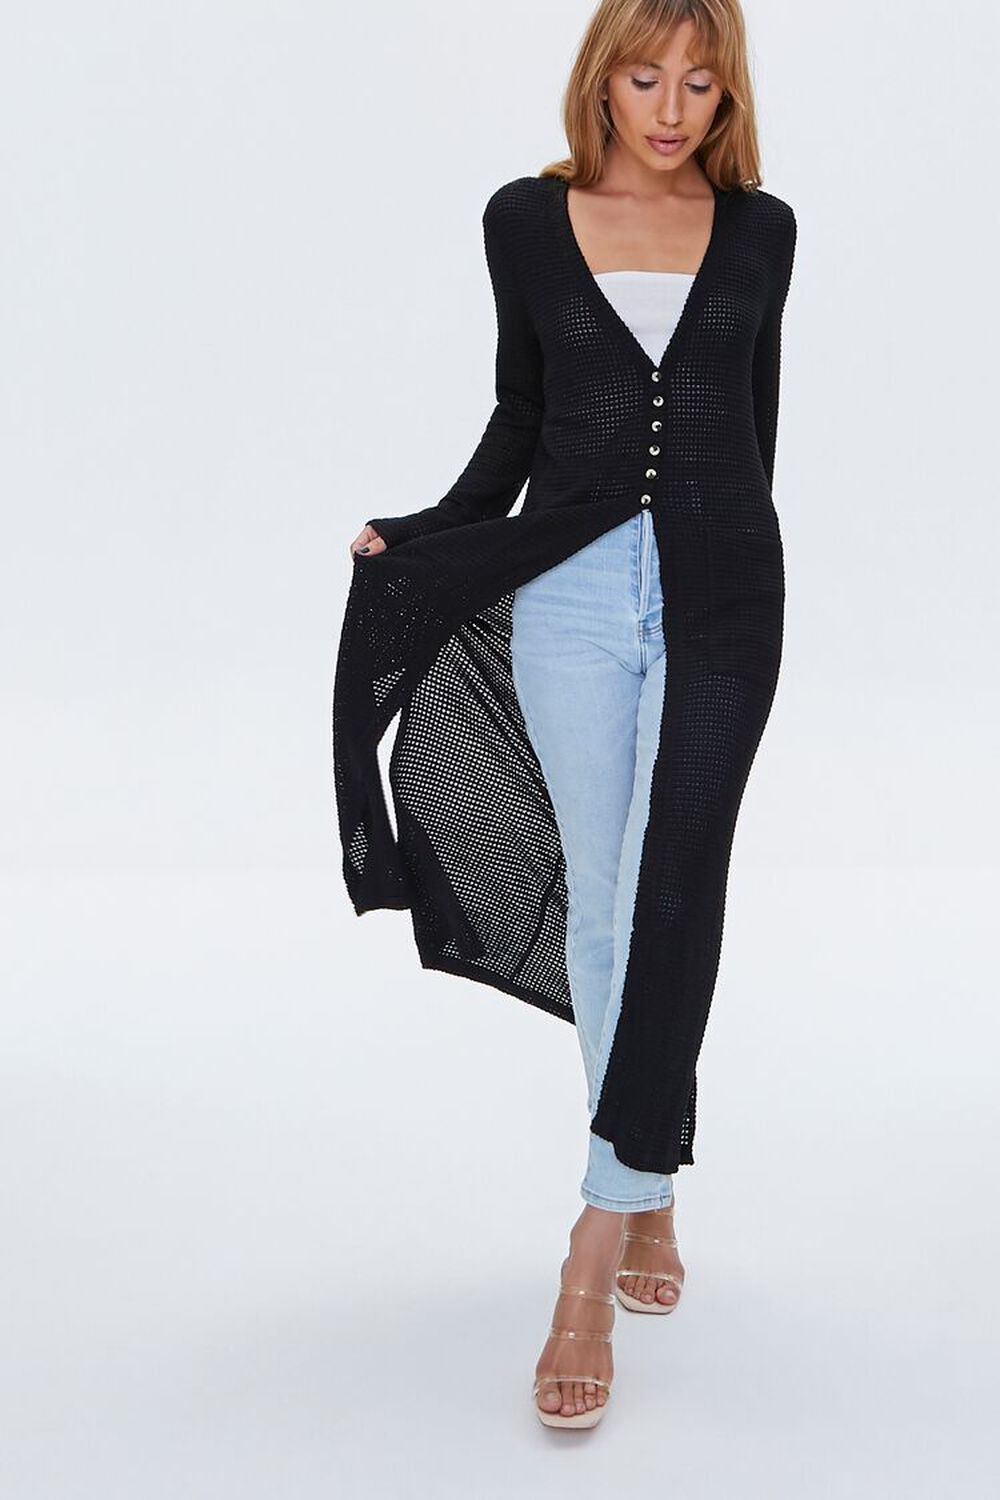 BLACK Longline Cardigan Sweater, image 2